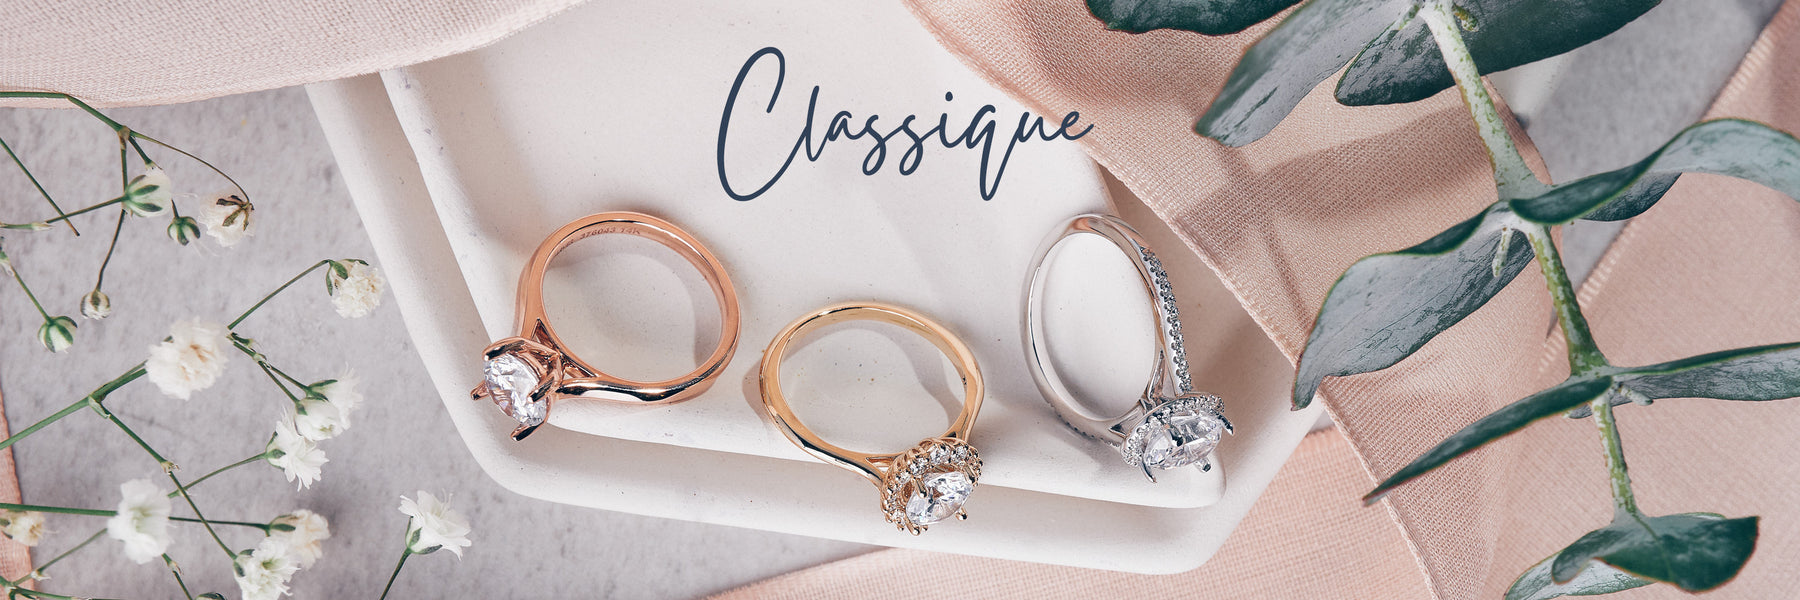 Assorted Classique brand diamond rings